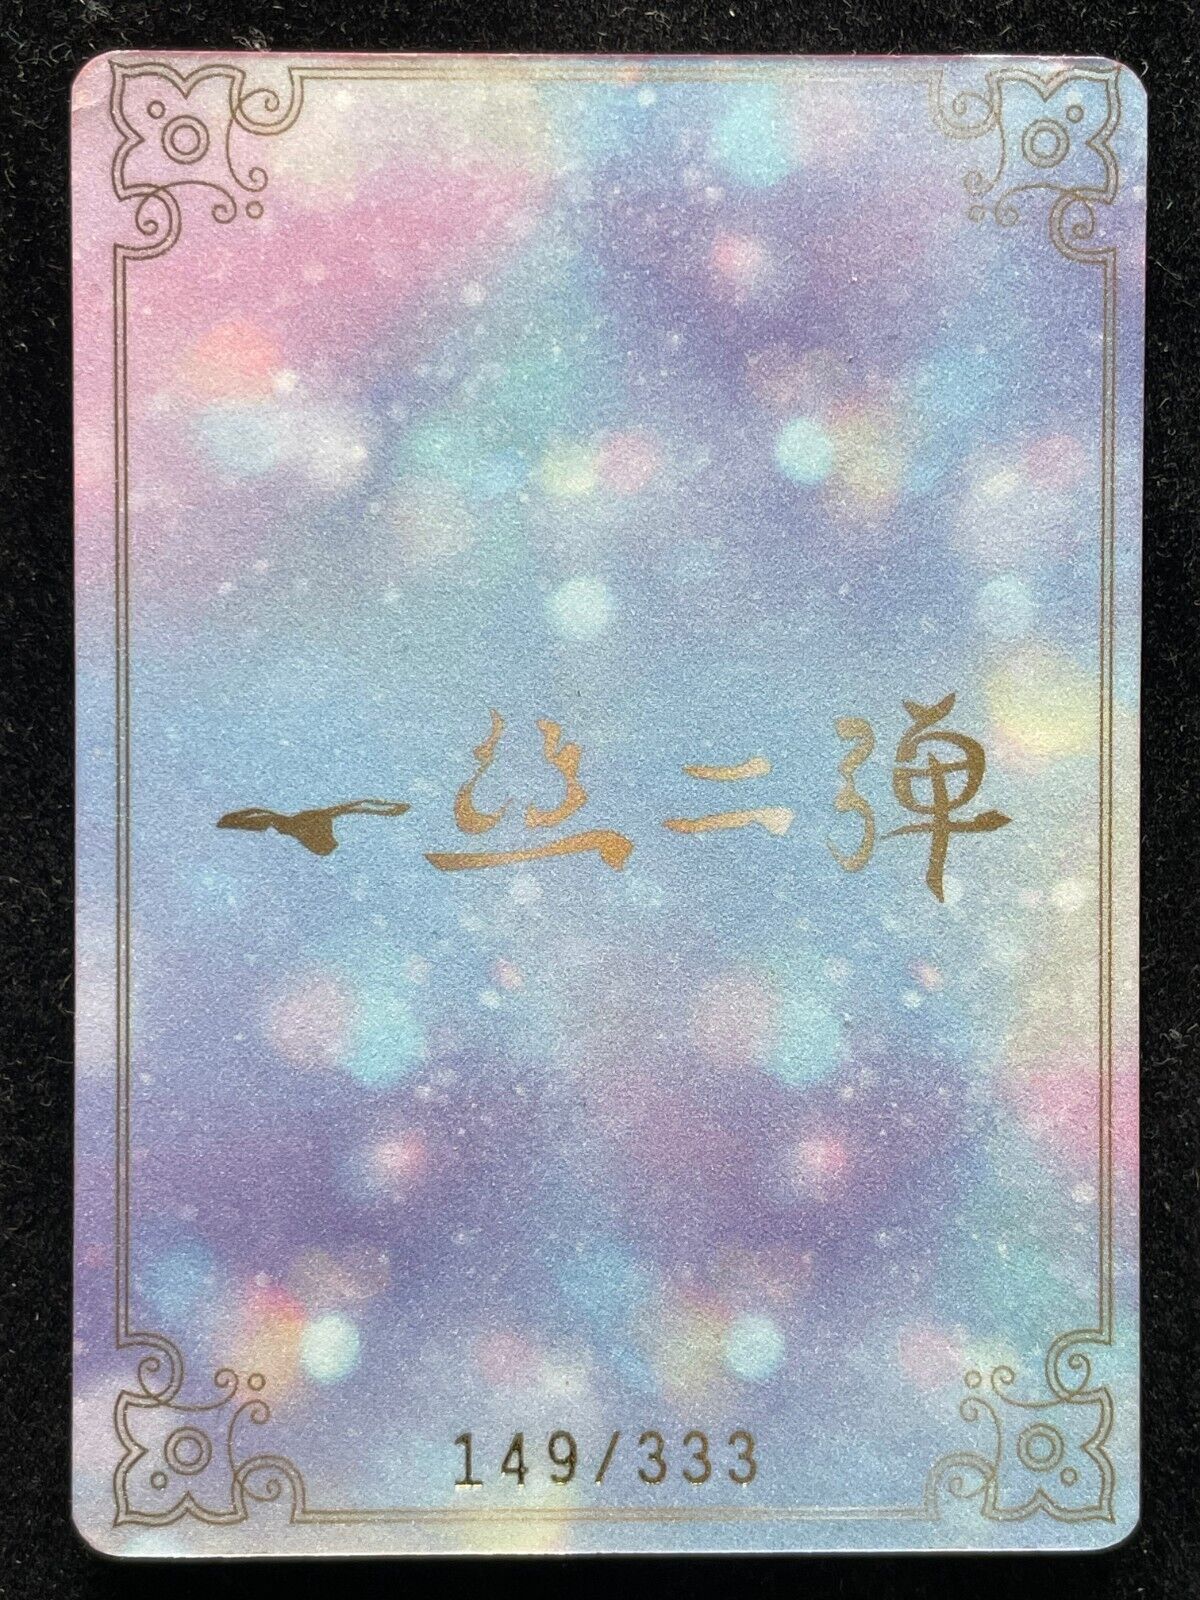 🔥 (149/333) Ganyu Genshin Meika 1 shot 2 Goddess Story Anime Waifu Card SK-18